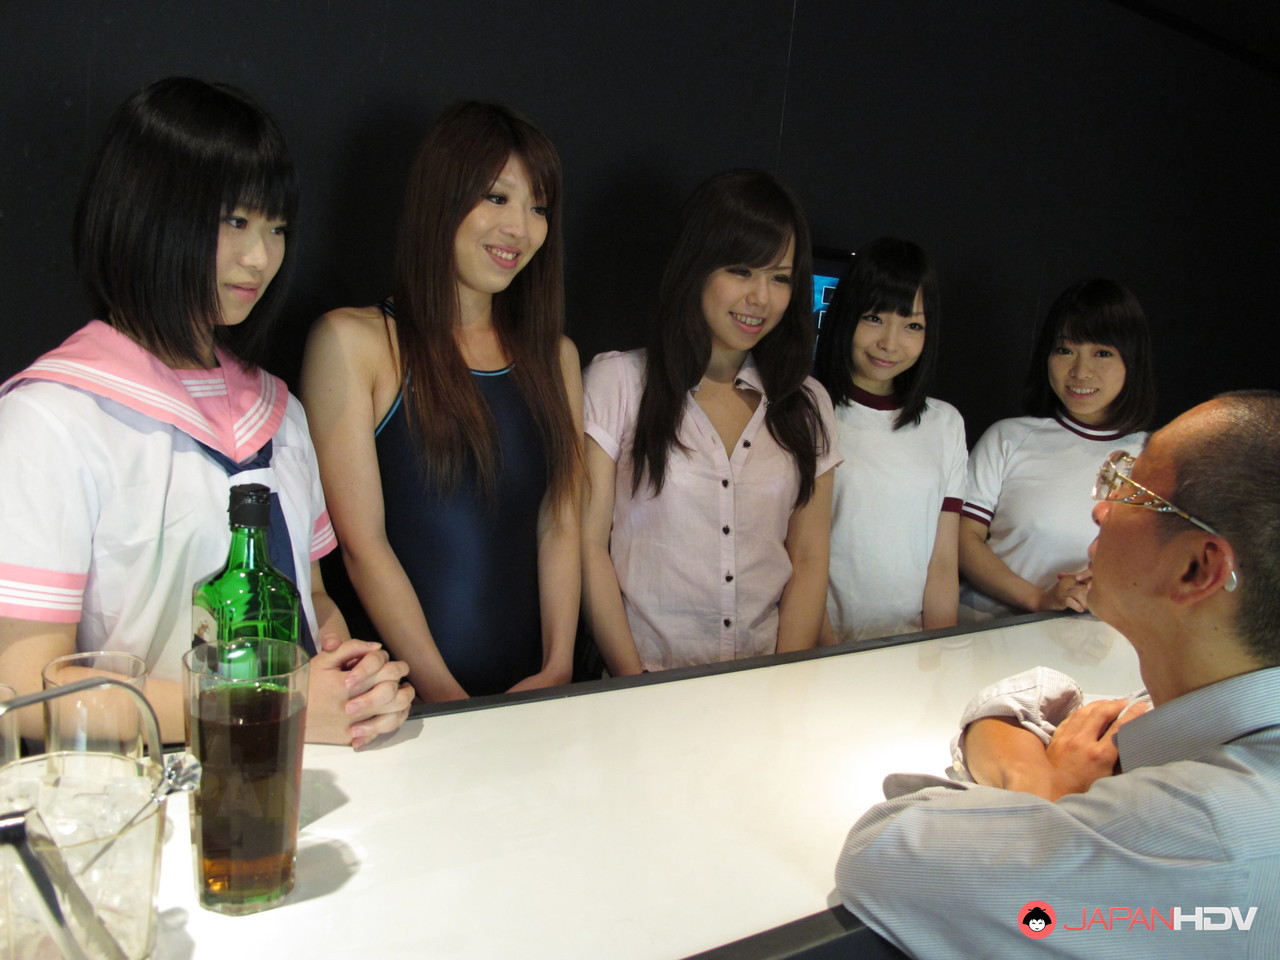 Cute Japanese teens participate in a wild Asian orgy in the nightclub foto porno #424451907